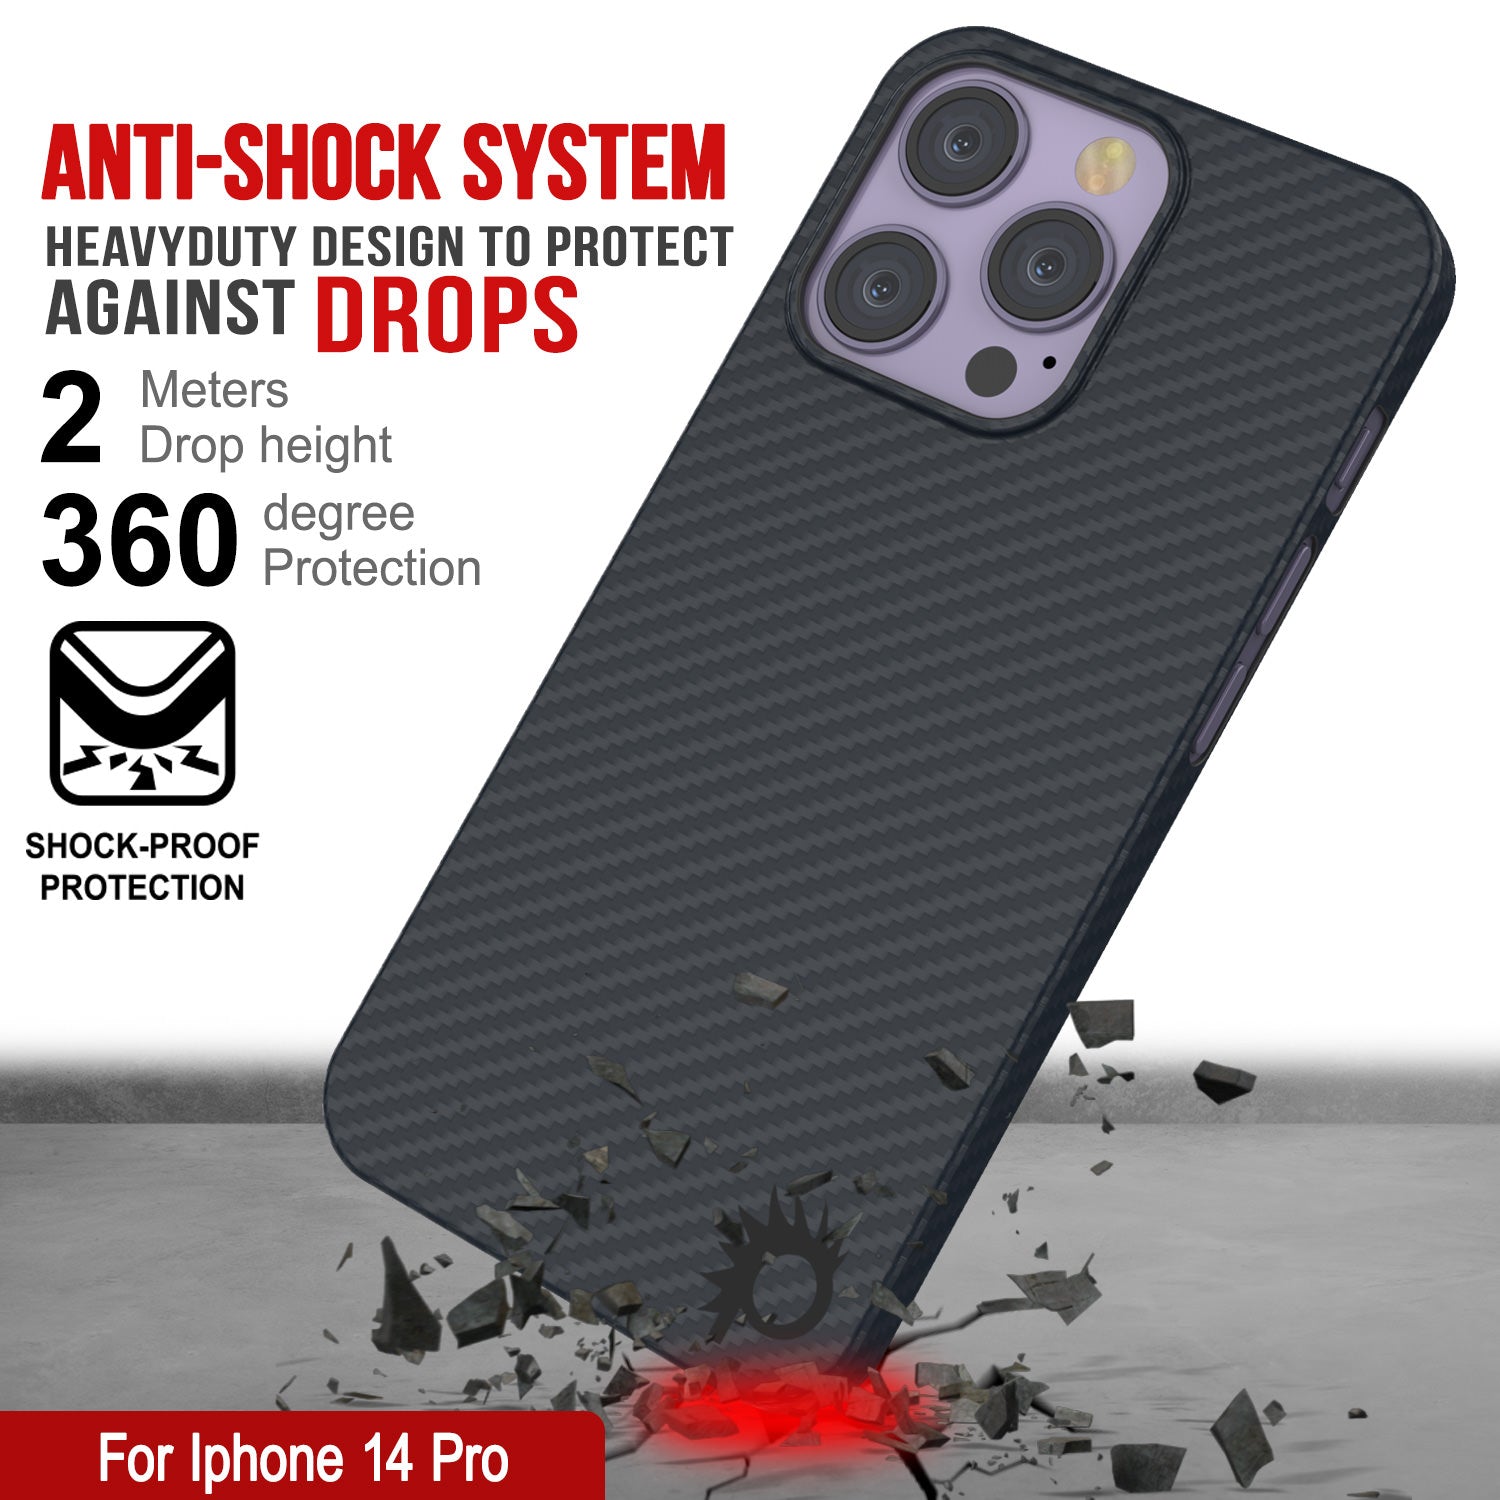 Punkcase iPhone 14 Pro Carbon Fiber Case [AramidShield Series] Ultra Slim & Light Kevlar